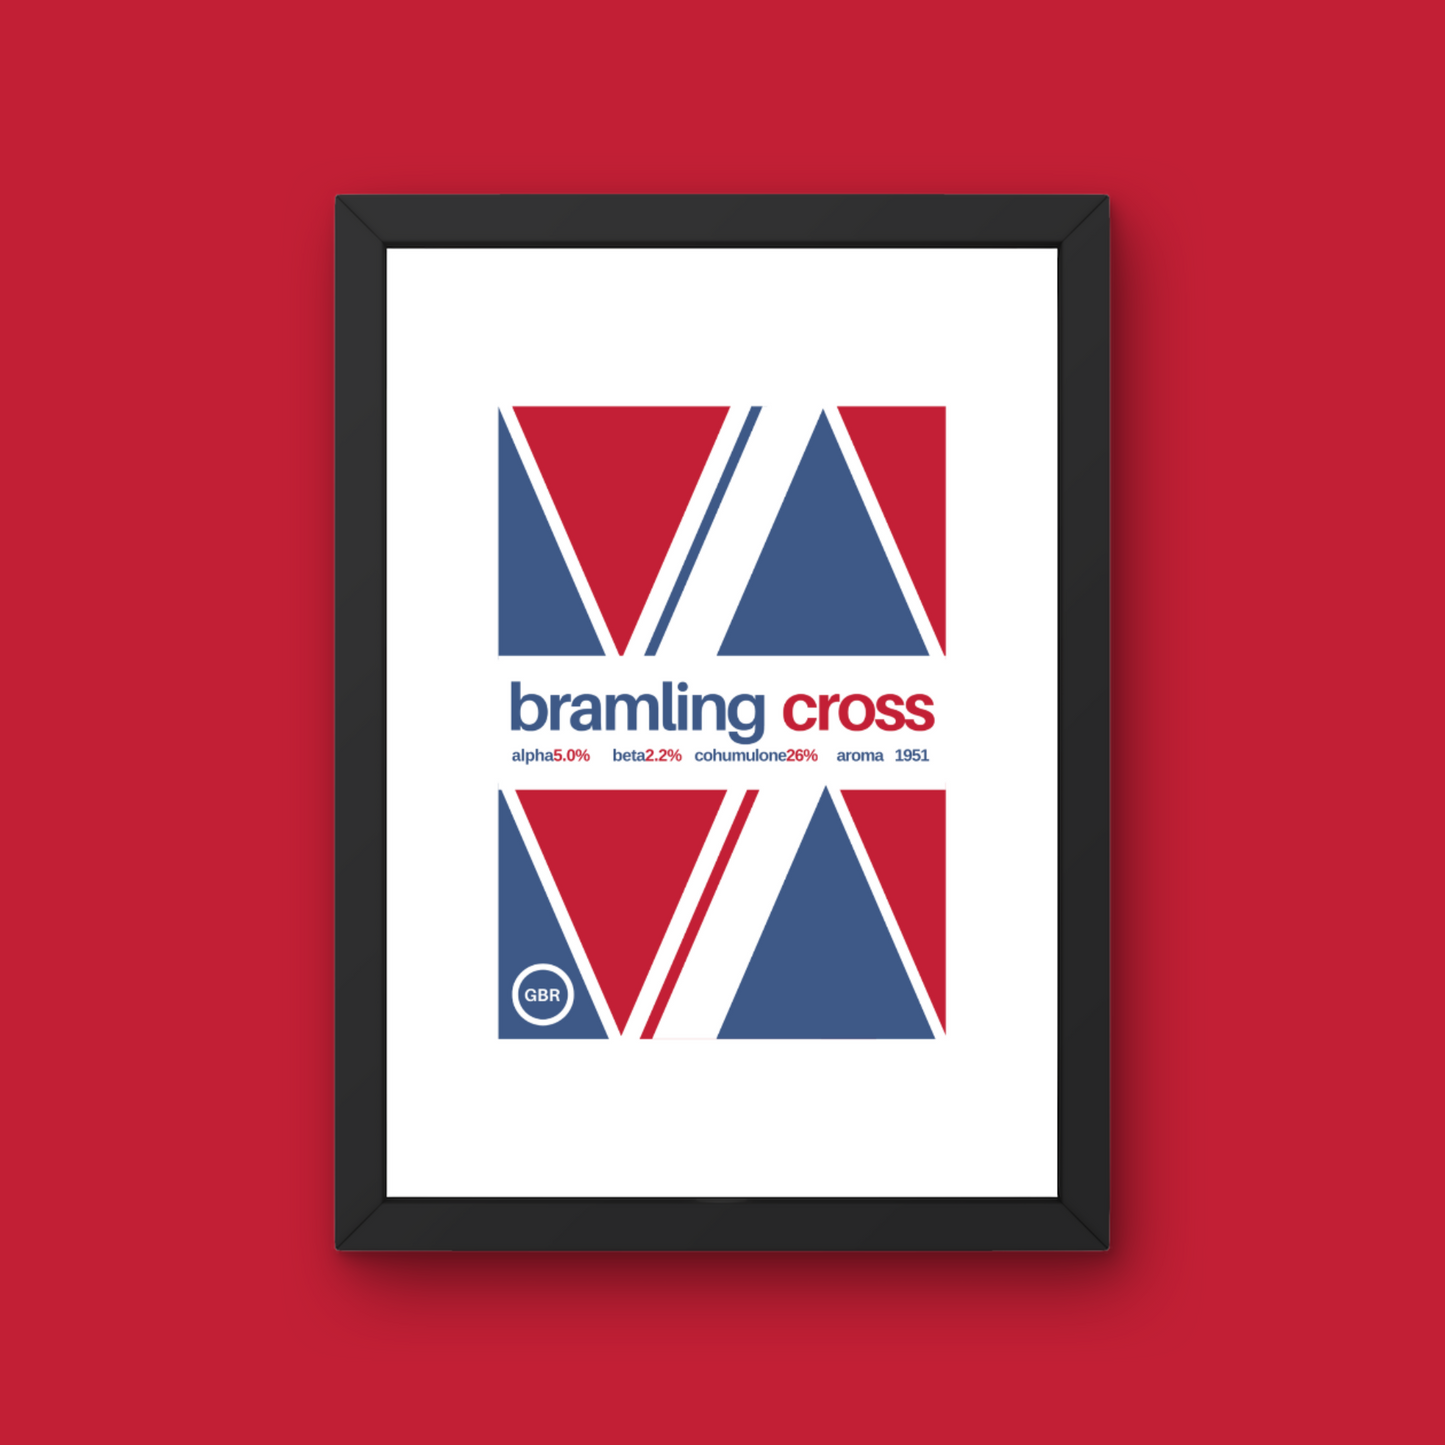 Bramling Cross